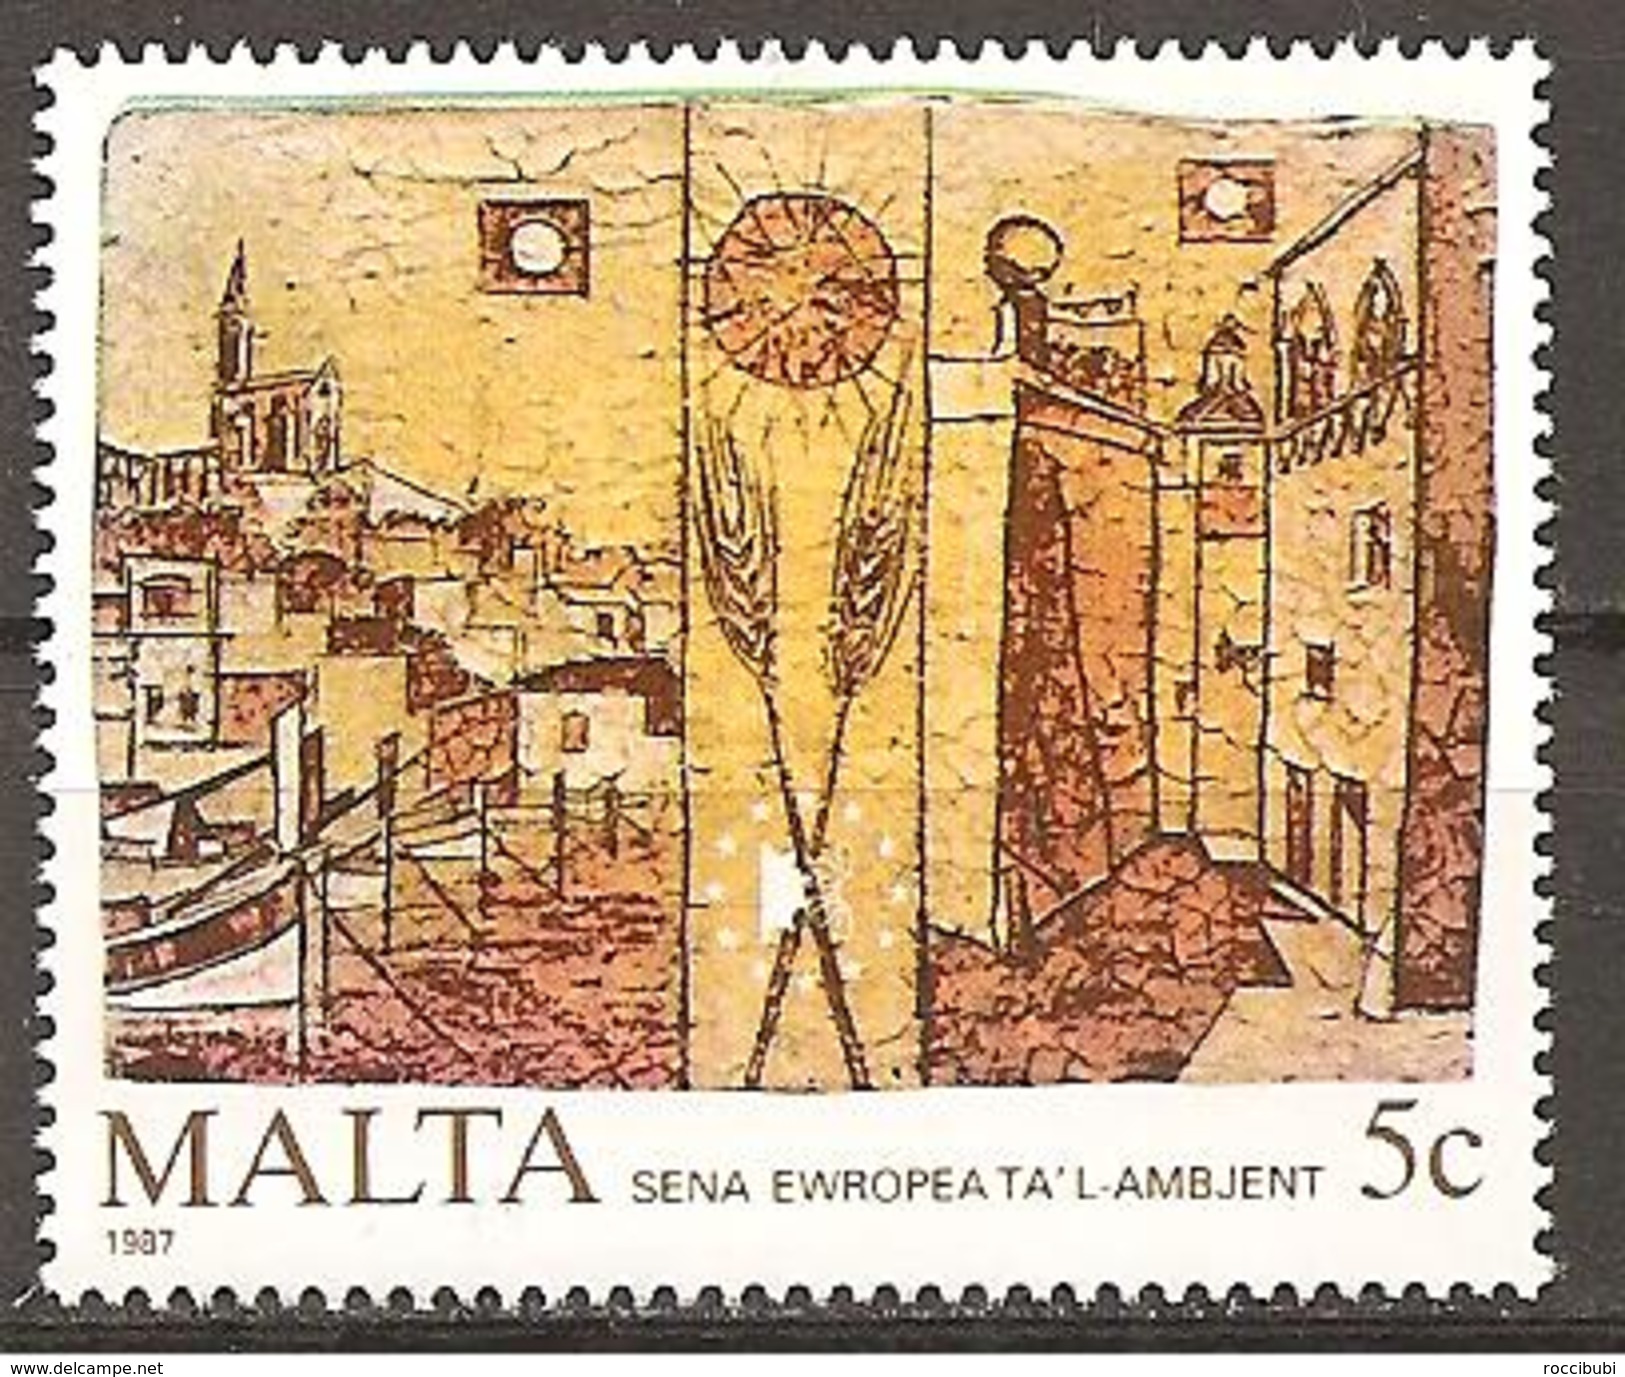 Malta 1987 // Michel 772 ** (M) - Gravuren